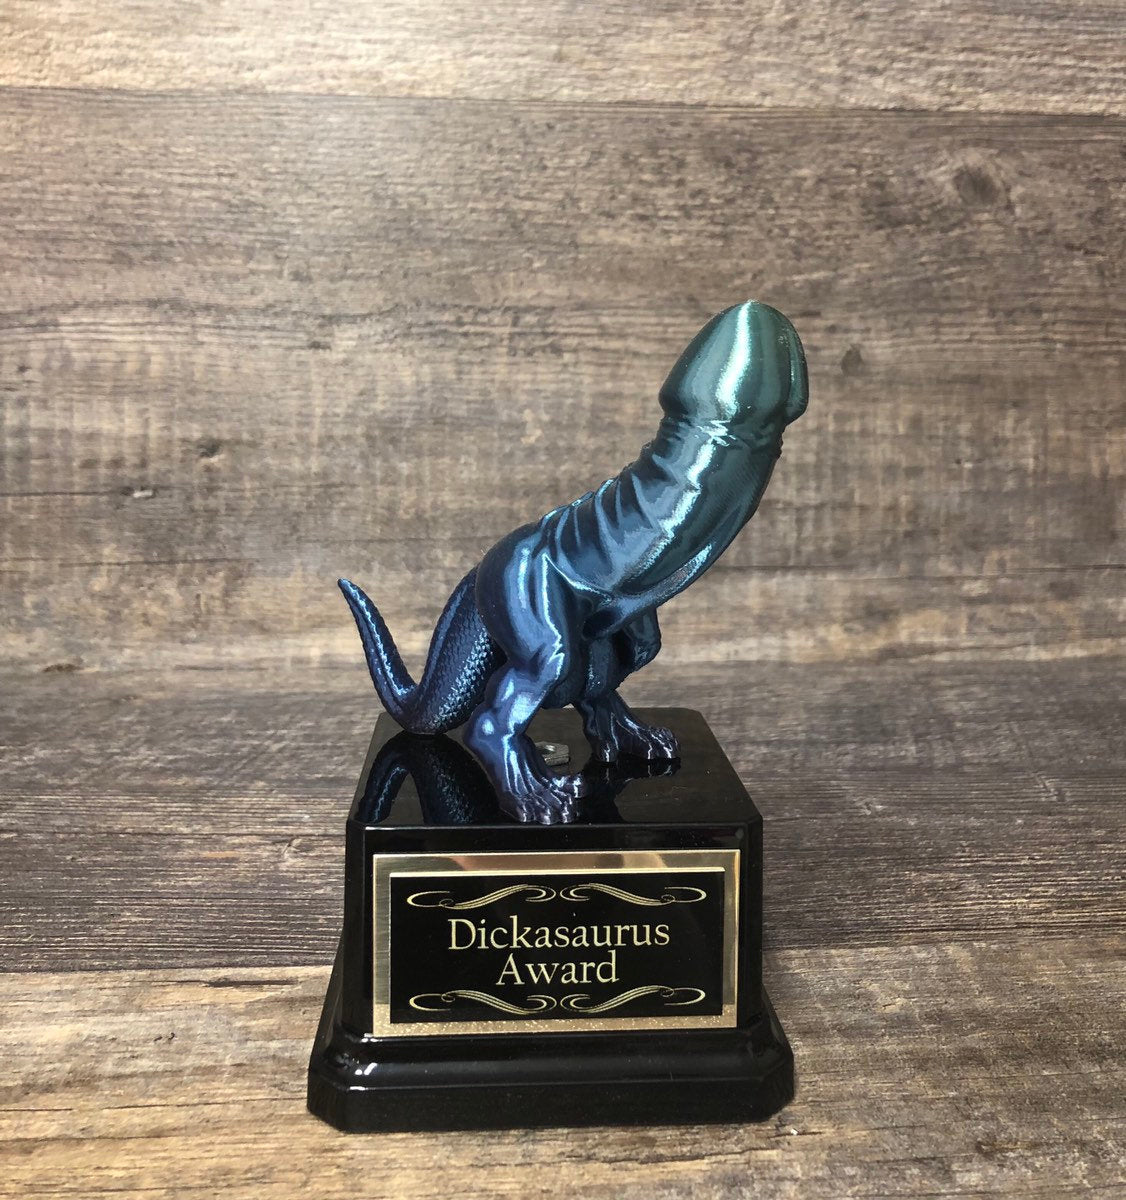 Funny Penis Trophy Award You're A Dick Mature Fantasy Football League LOSER Trophy Adult Humor Dickhead Penis Funny Dinosaur Award